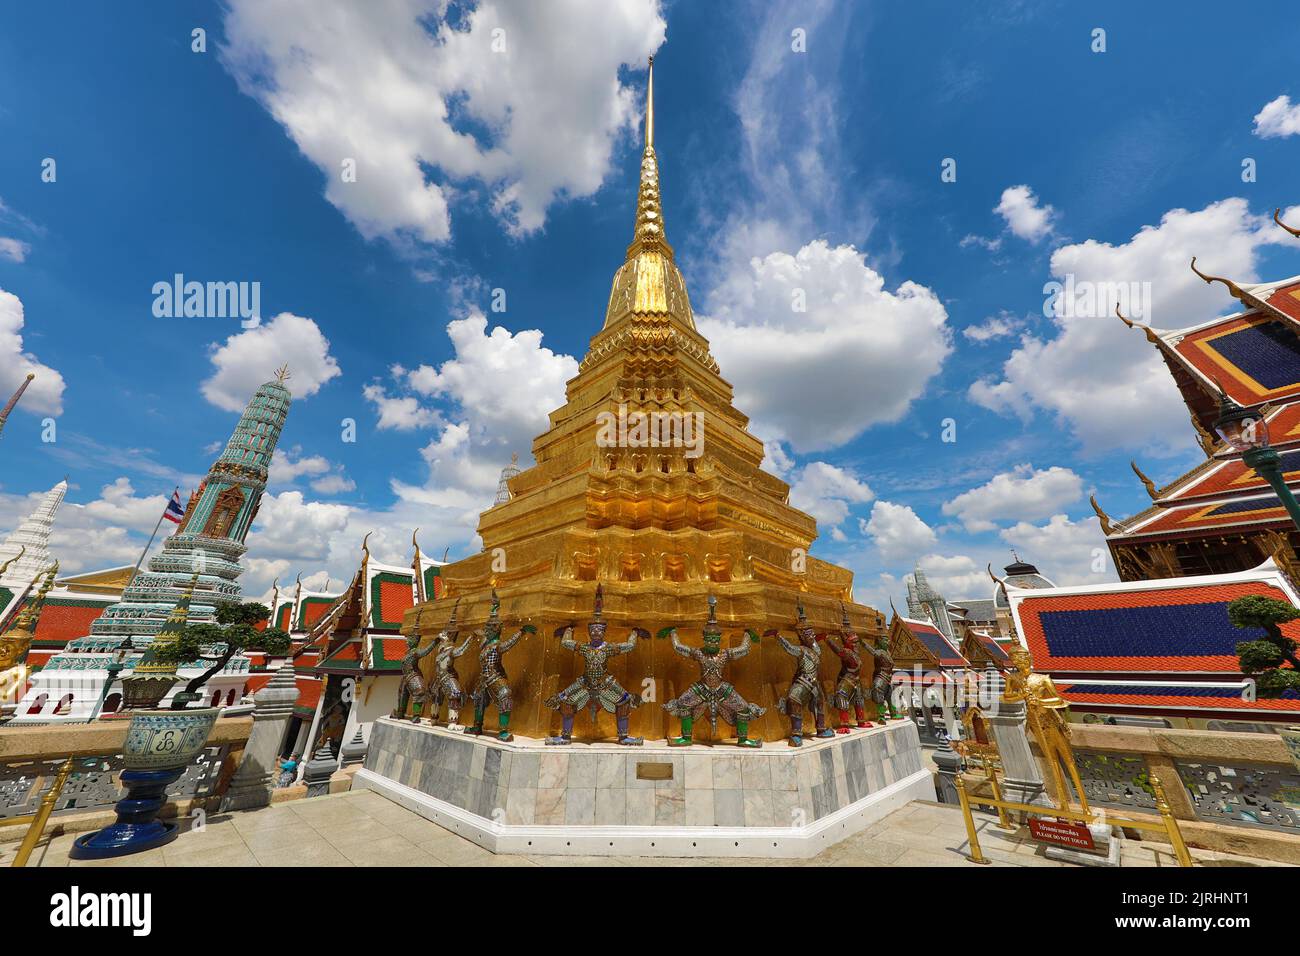 Yaksha Dämonenstatuen auf einem goldenen Chedi, Phra Suvarlackachedi, im Wat Phra Kaew, Tempel des Smaragd-Buddha, Bangkok, Thailand Stockfoto